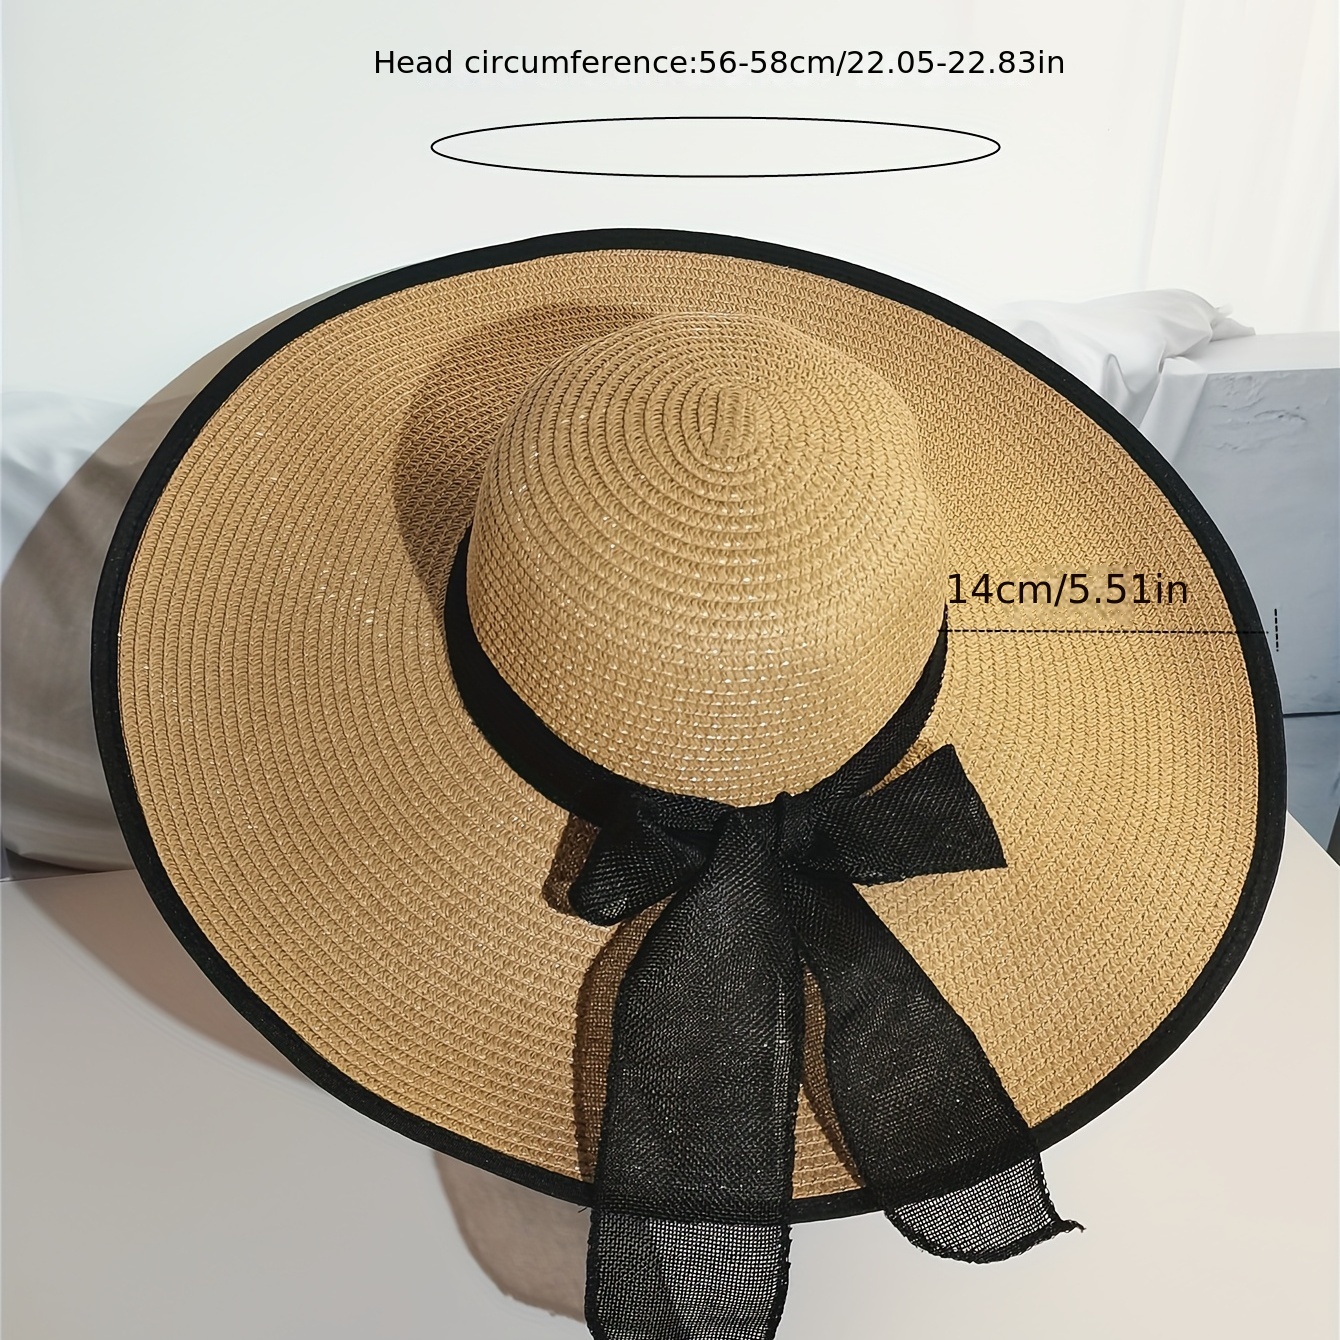 Brim And Bow Summer Hat Summer Hat Foldable Wide Brim Floppy Straw Sun Hat  Summer Beach Hat for Women Girl New 